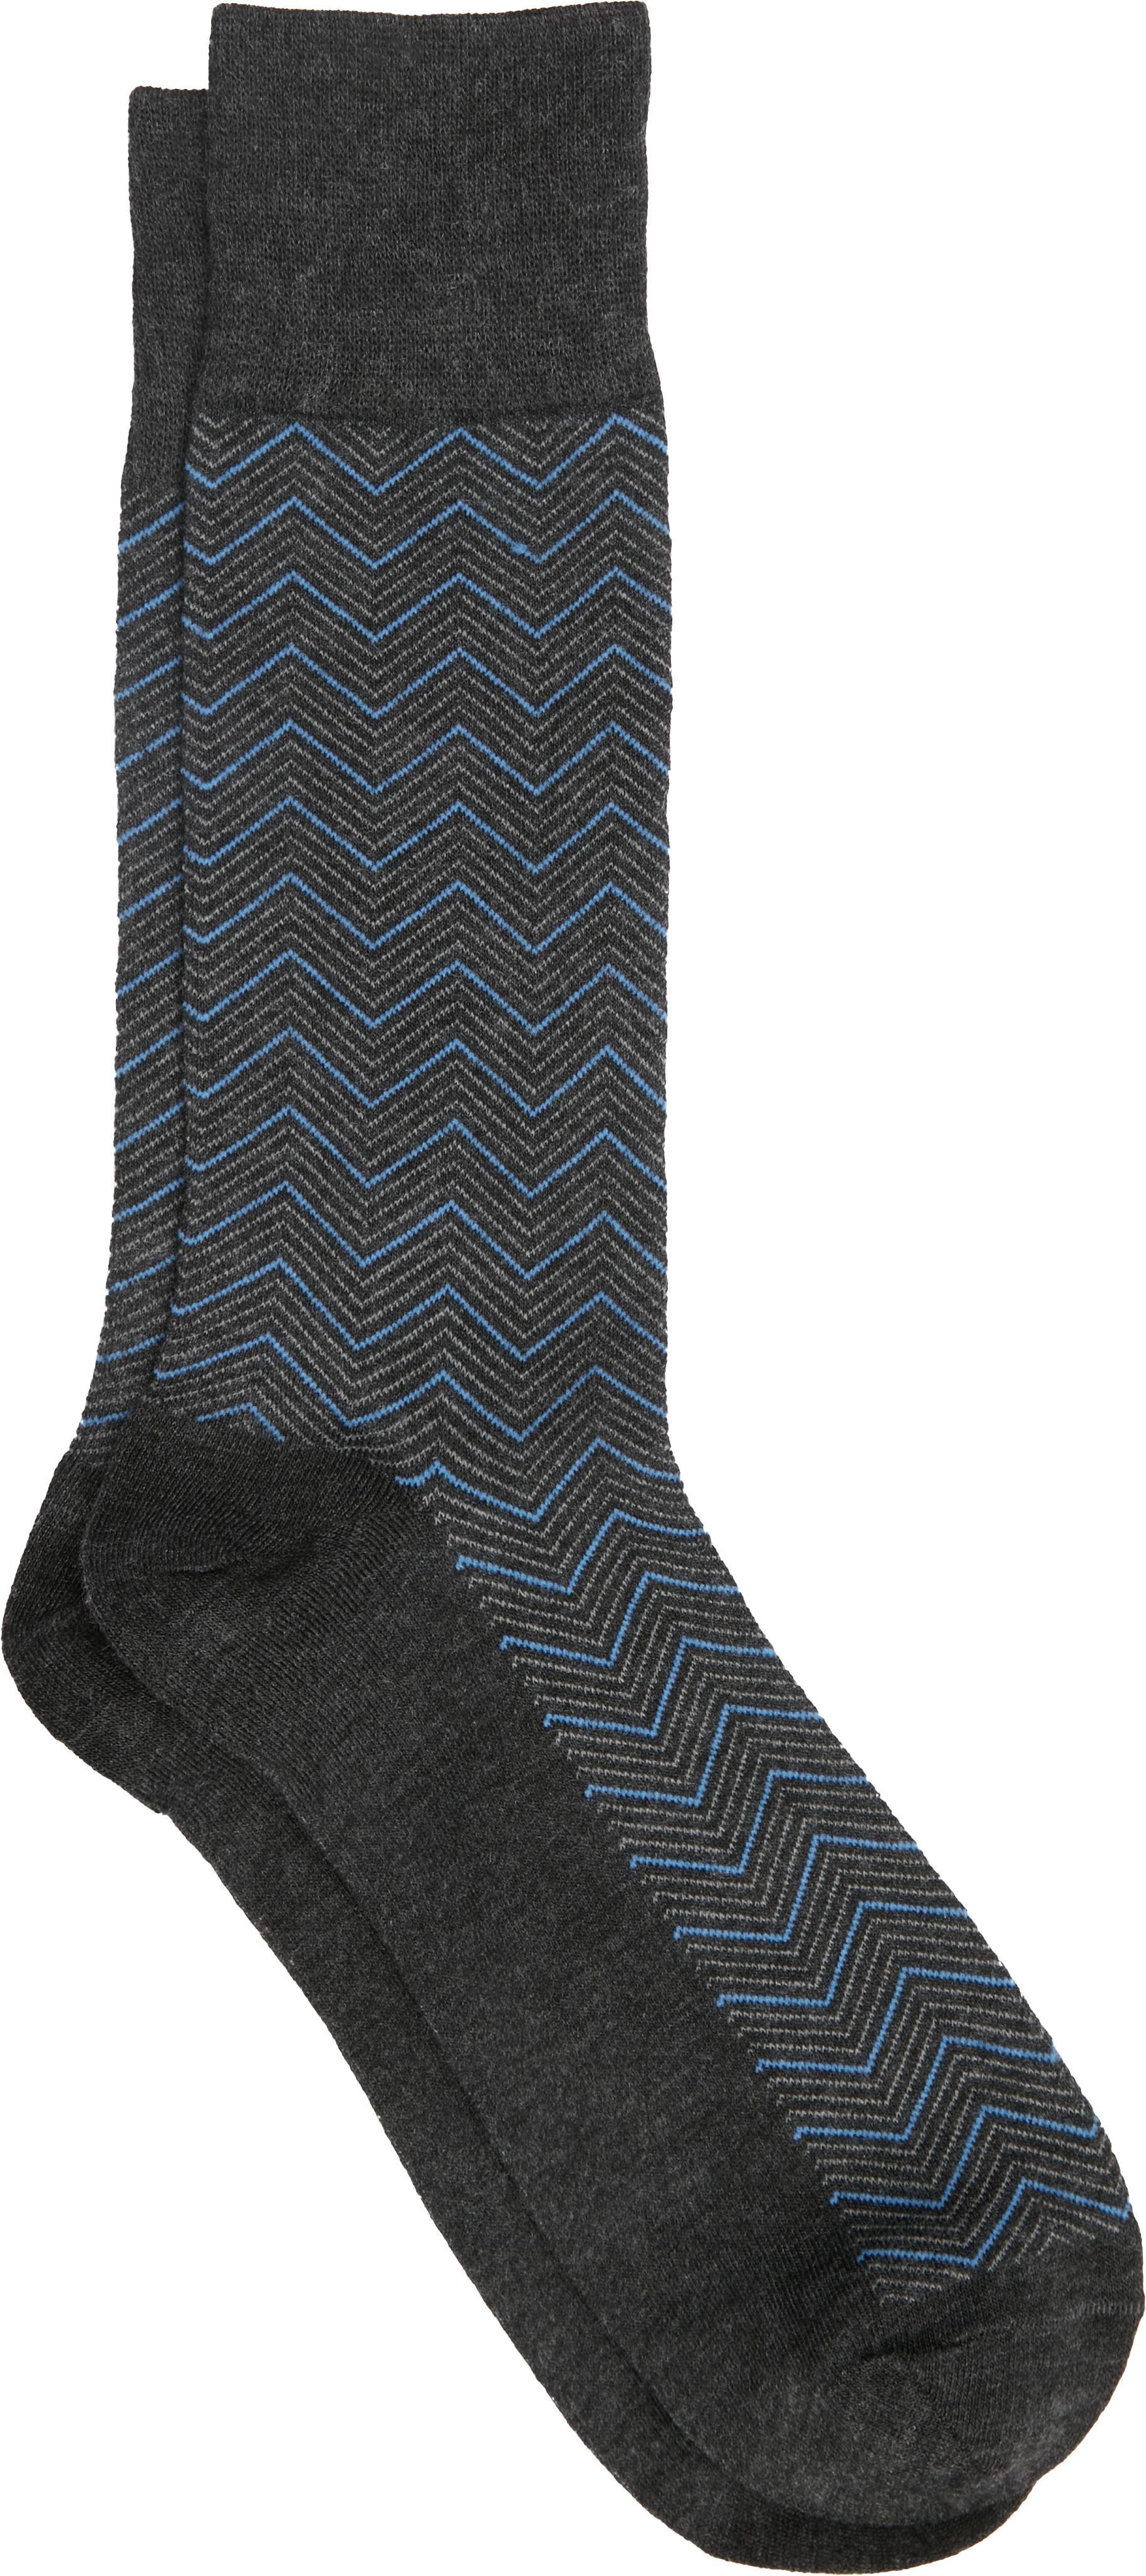 Pronto Uomo Socks, Gray Chevron - Men's Accessories | Men's Wearhouse